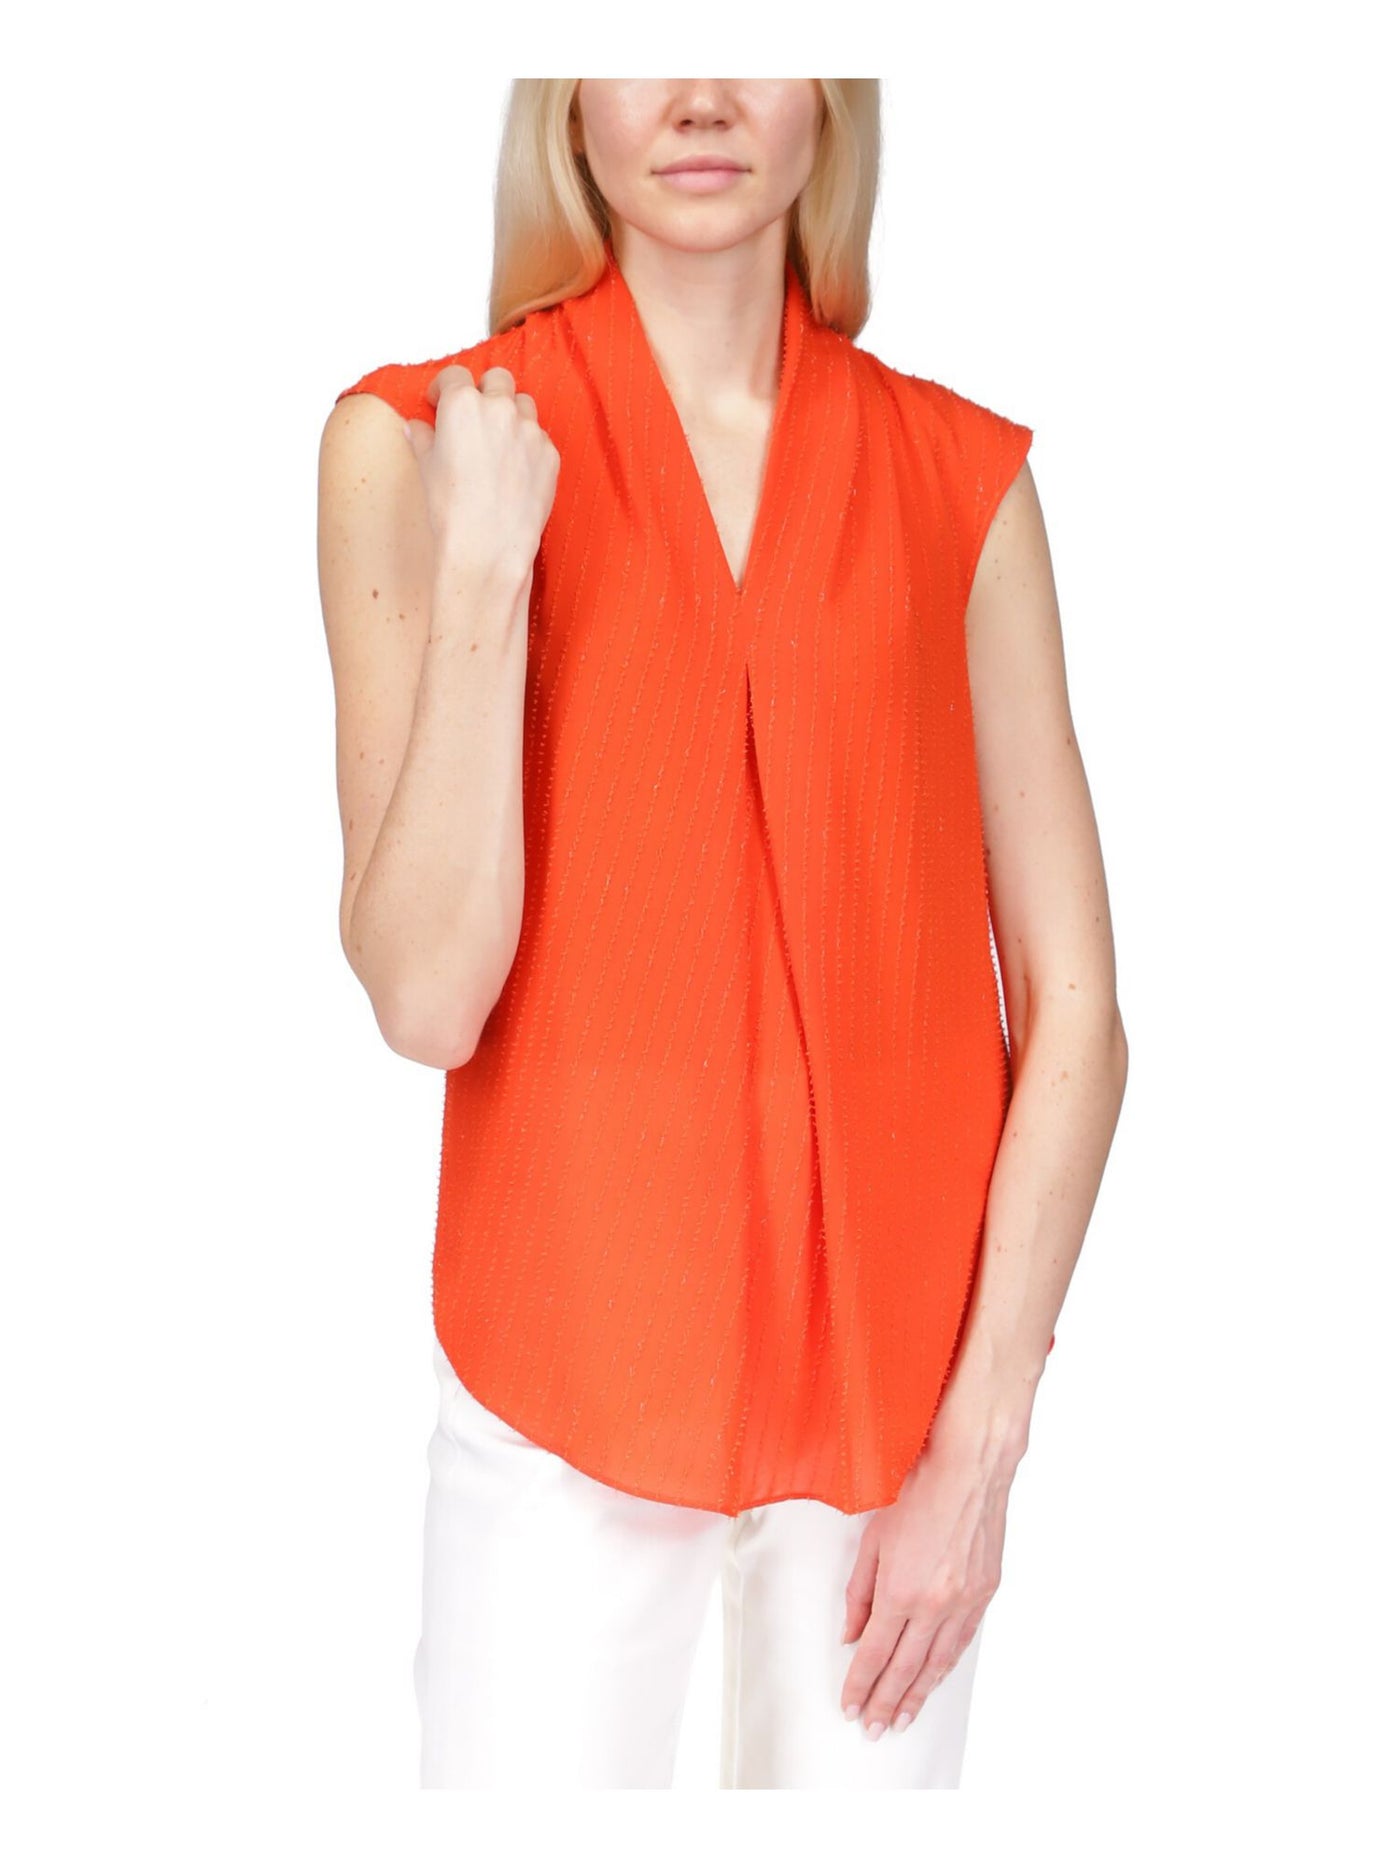 MICHAEL MICHAEL KORS Womens Orange Textured Pleated Curved Hem Cap Sleeve V Neck Top S